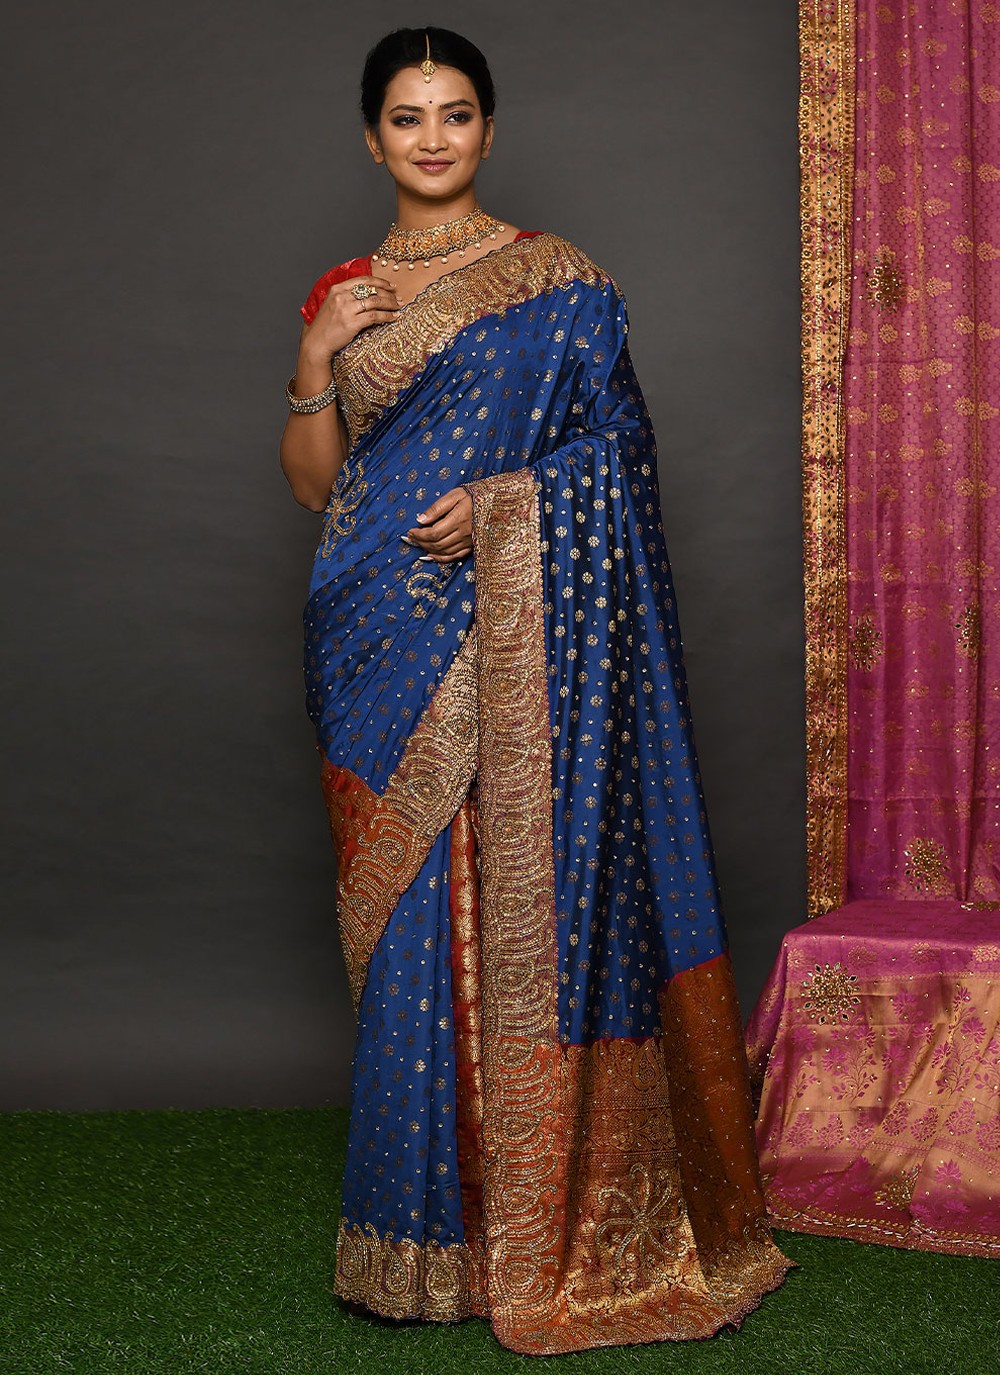 Saree Handwork Kanjivaram Silk in Navy Blue